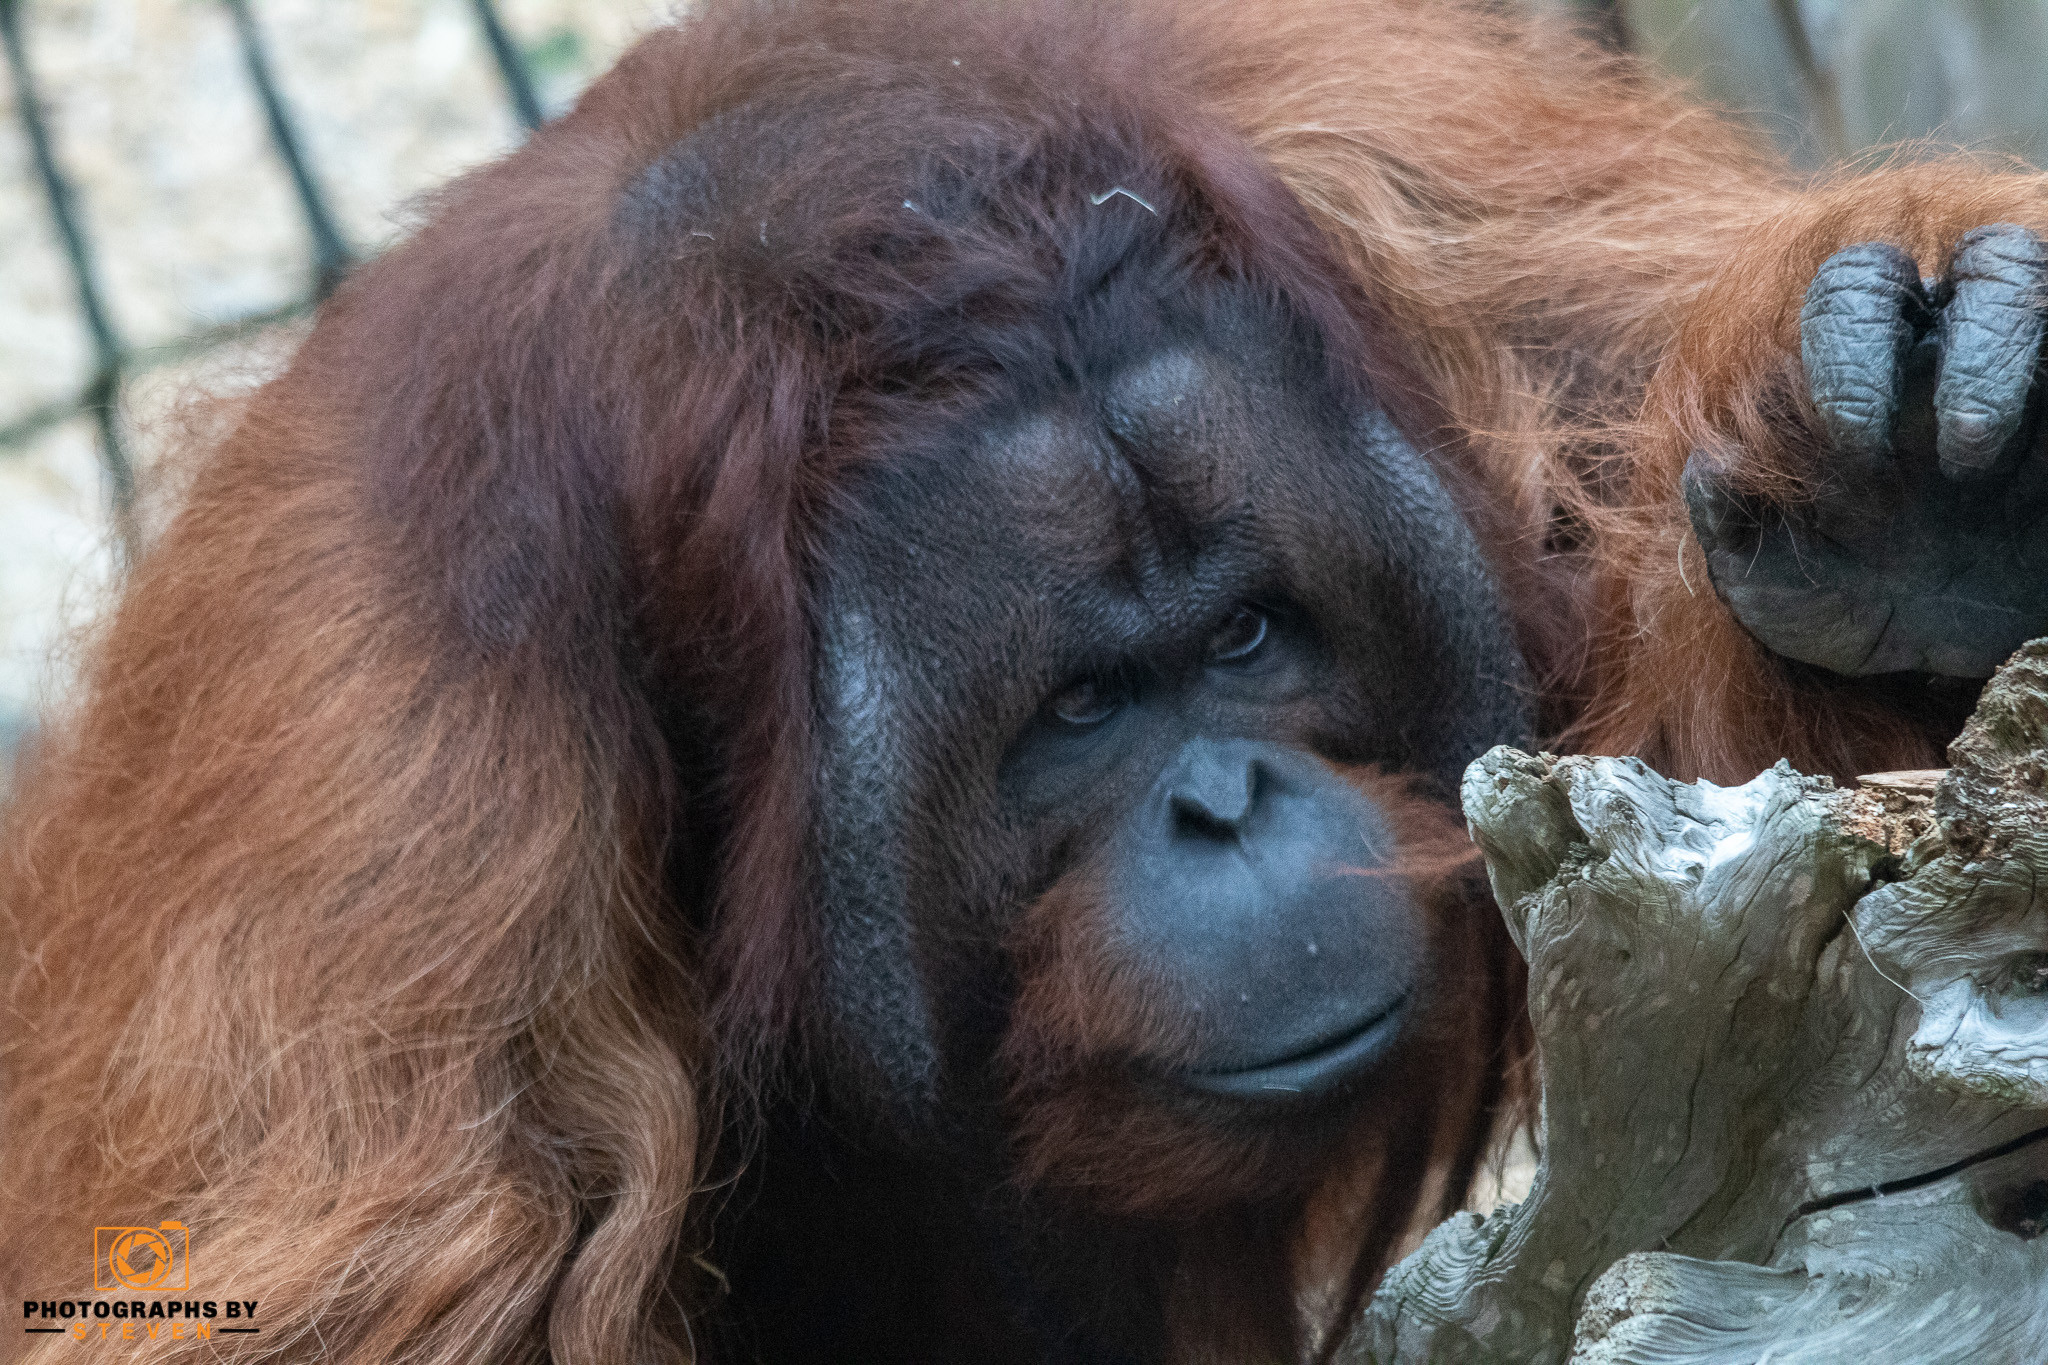 Adult orangutan